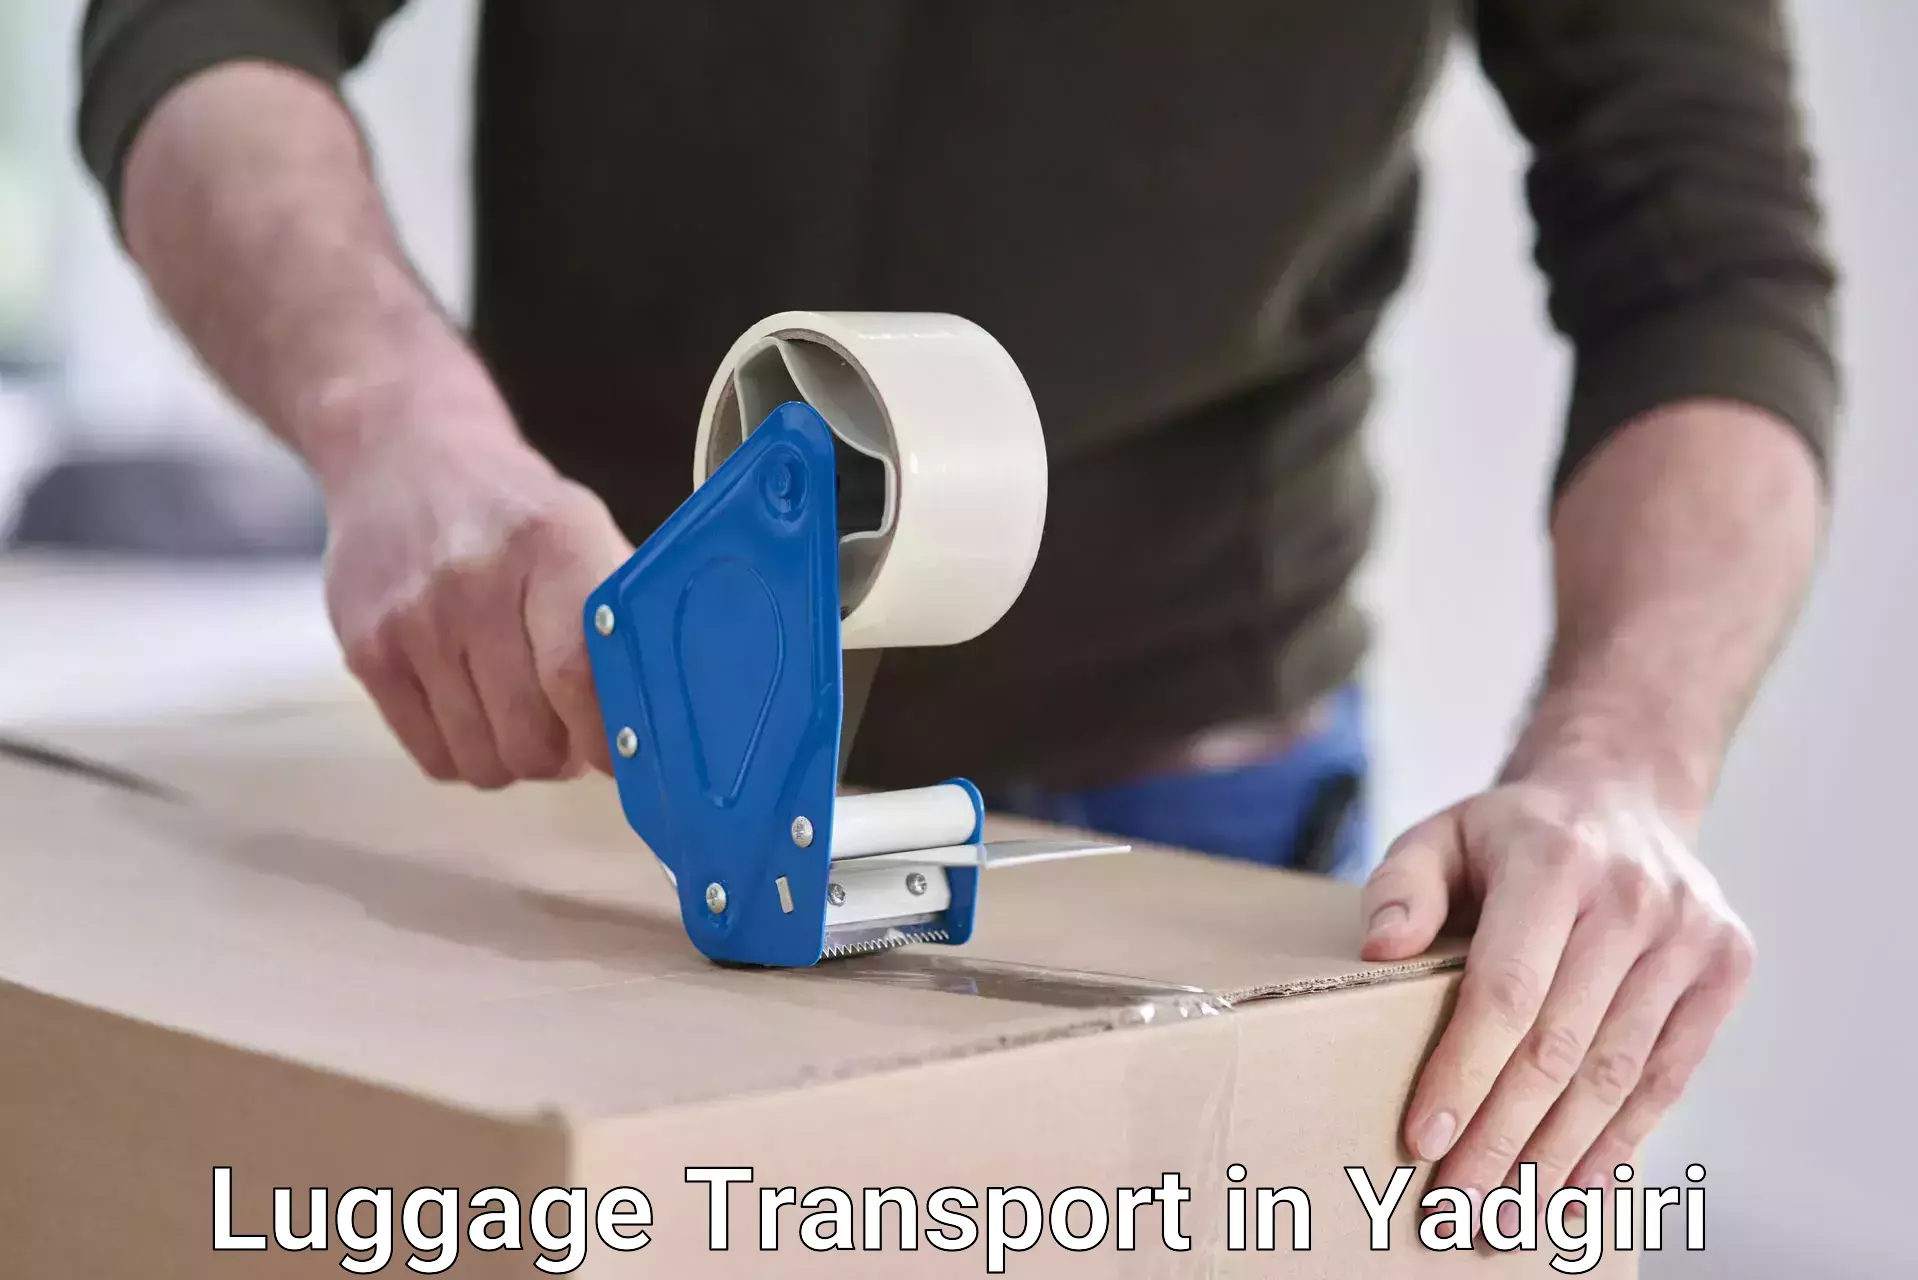 Luggage shipping solutions in Yadgiri